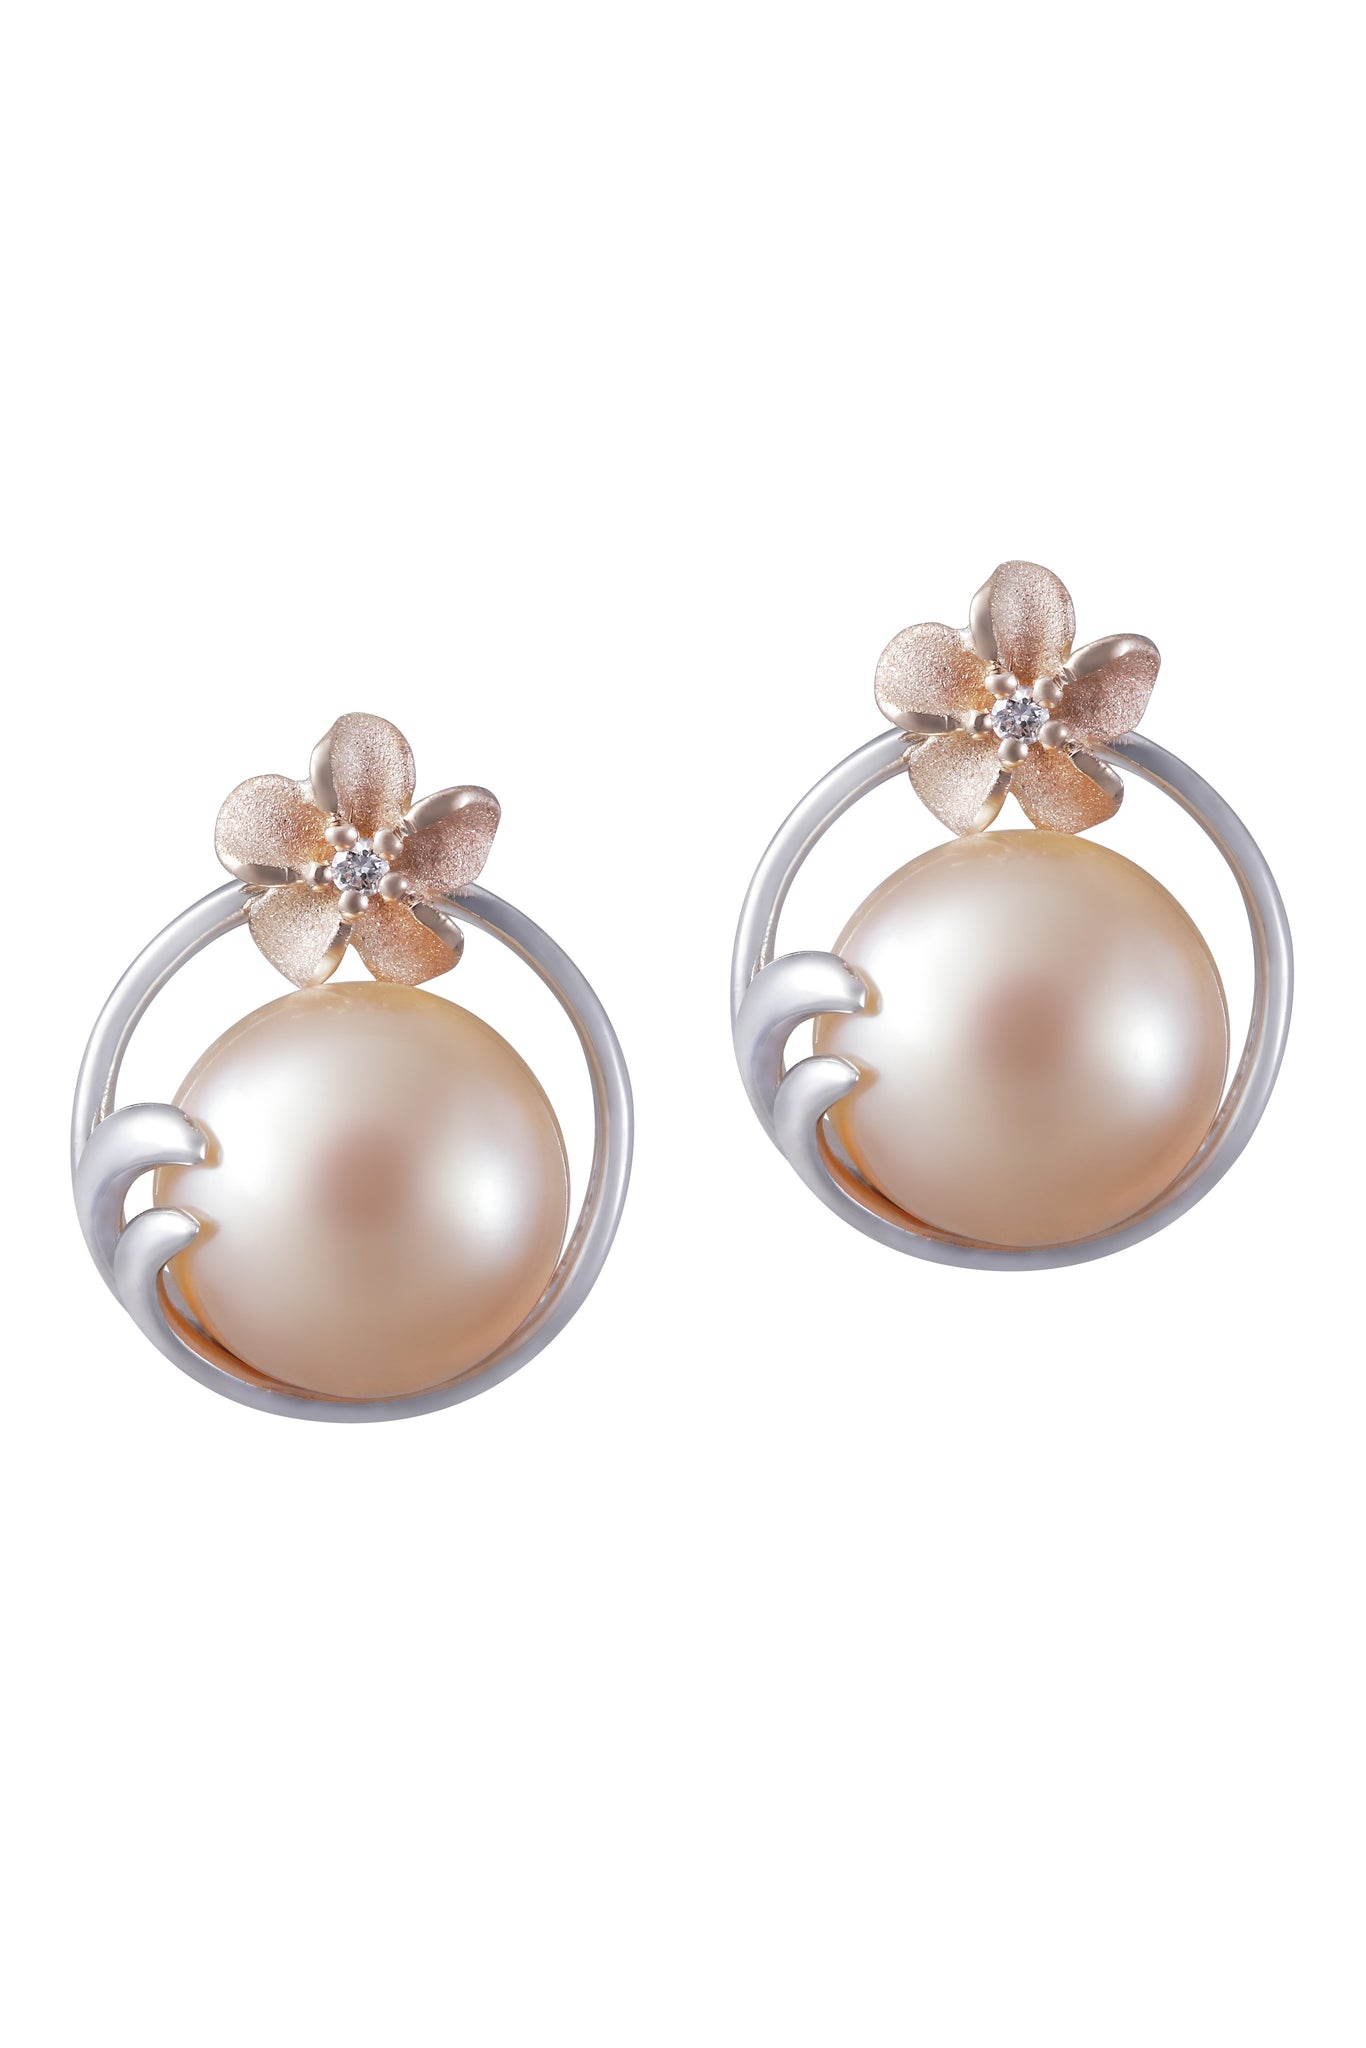 Plumeria and 9-9.5mm Peach Fresh Water Cultured Pearl Earrings